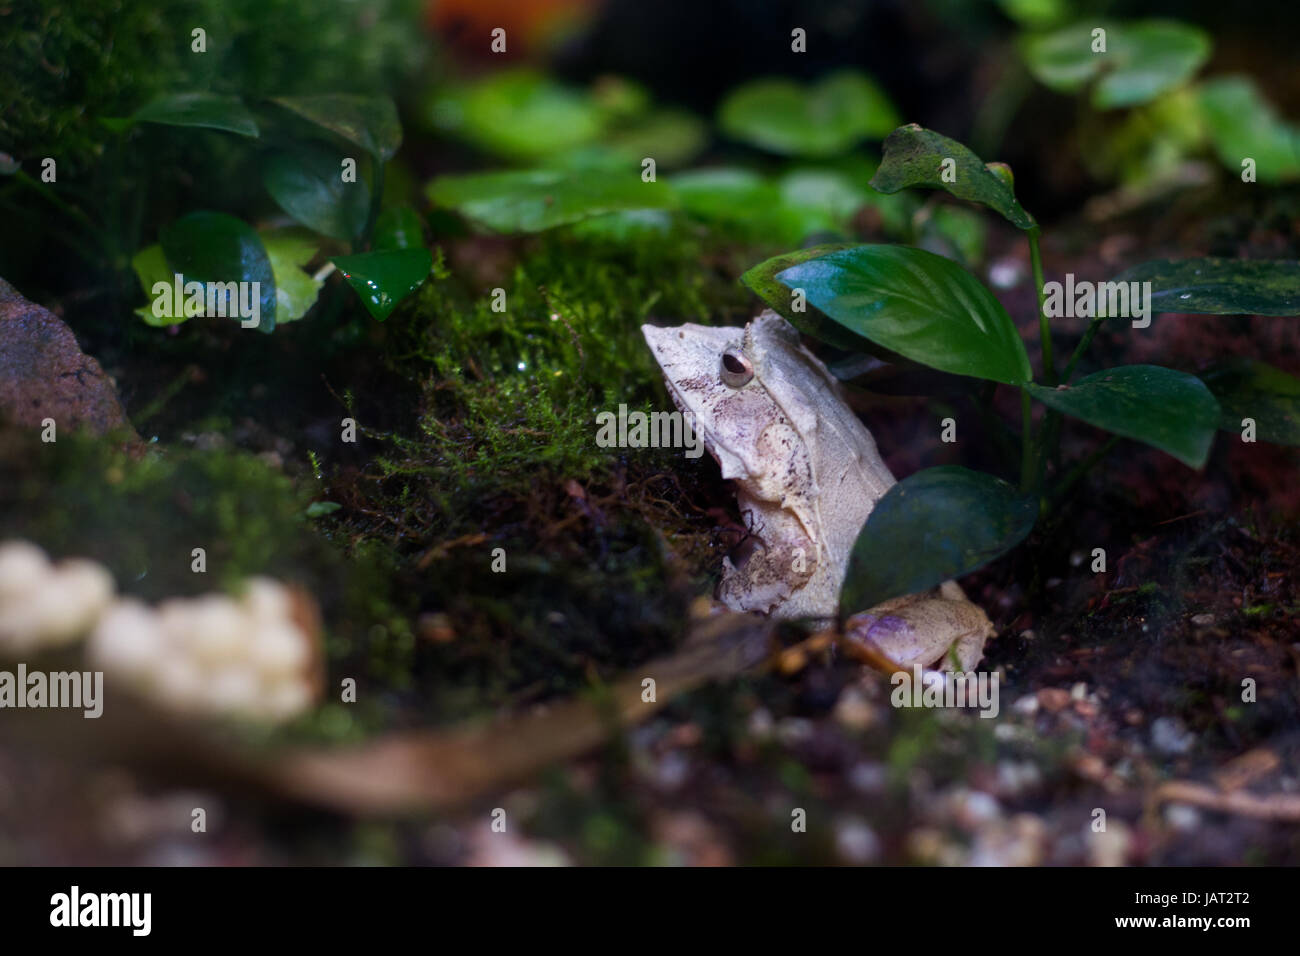 Solomon Island Leaf Frog ceratobatrachus guentheri Stock Photo